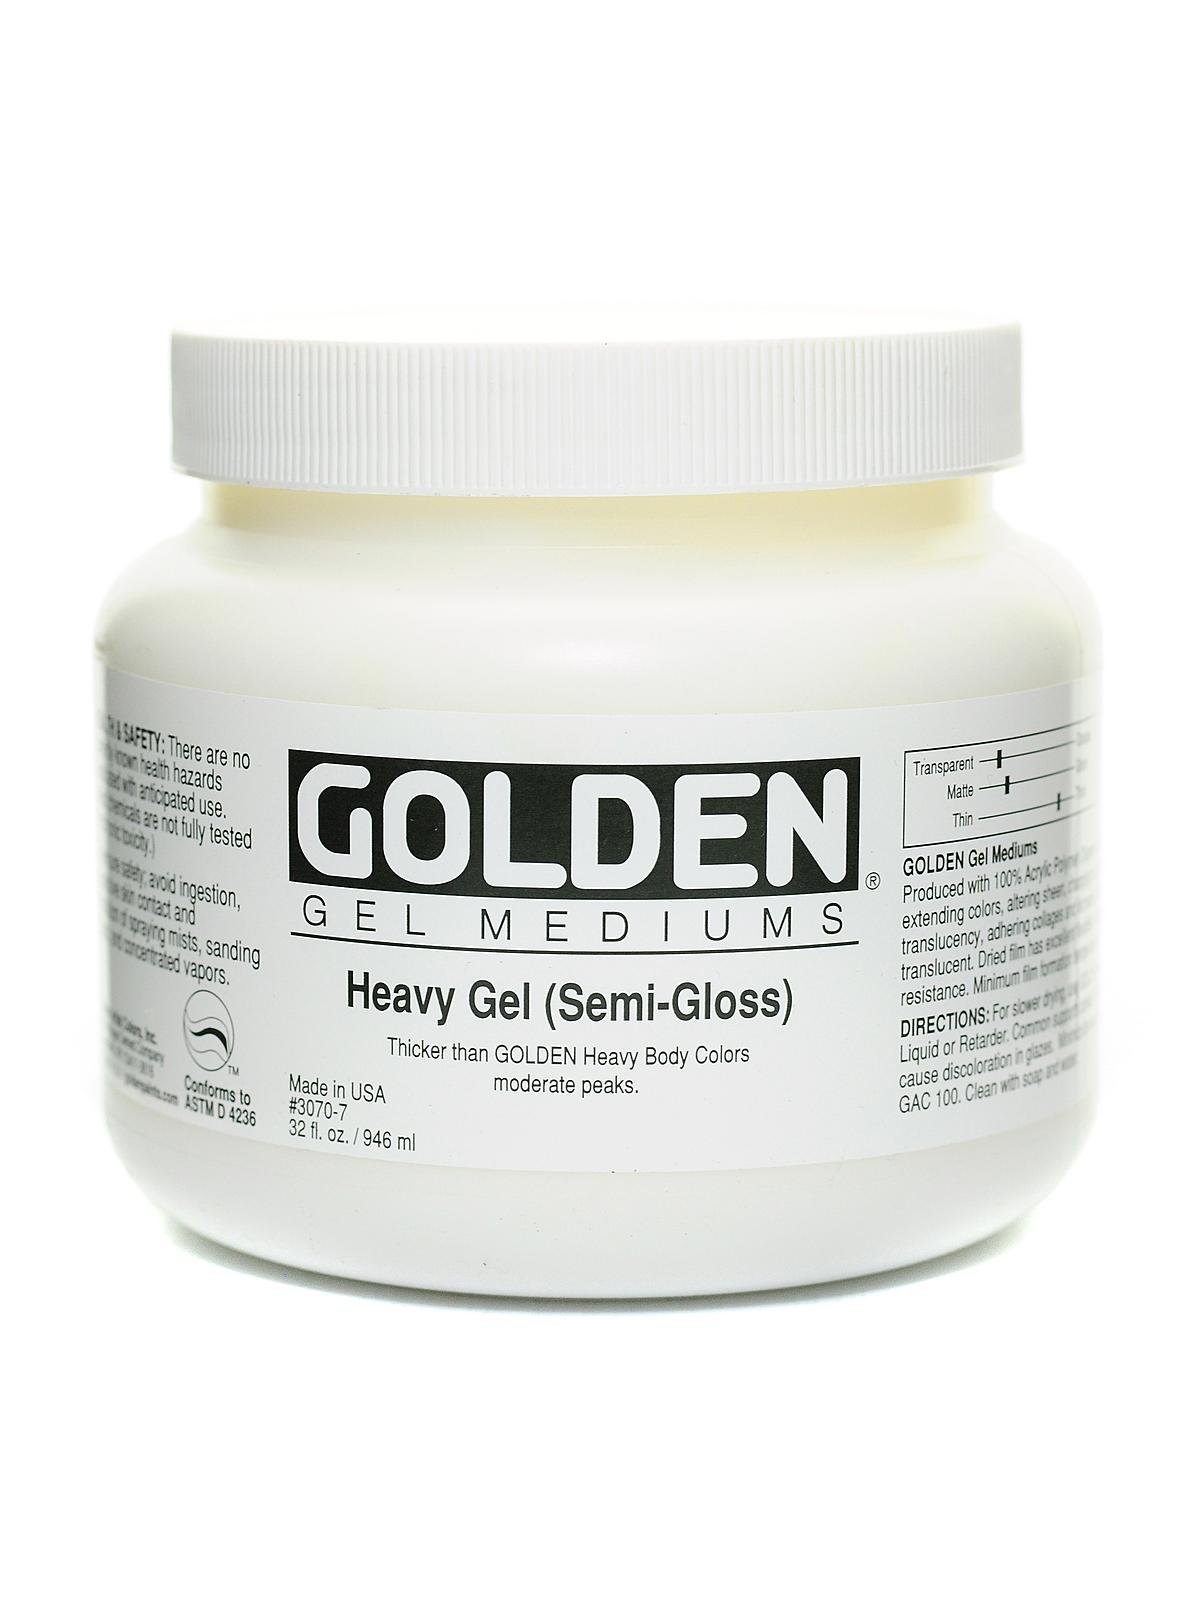 Golden - Extra Heavy Gel - Gloss - 8 oz.